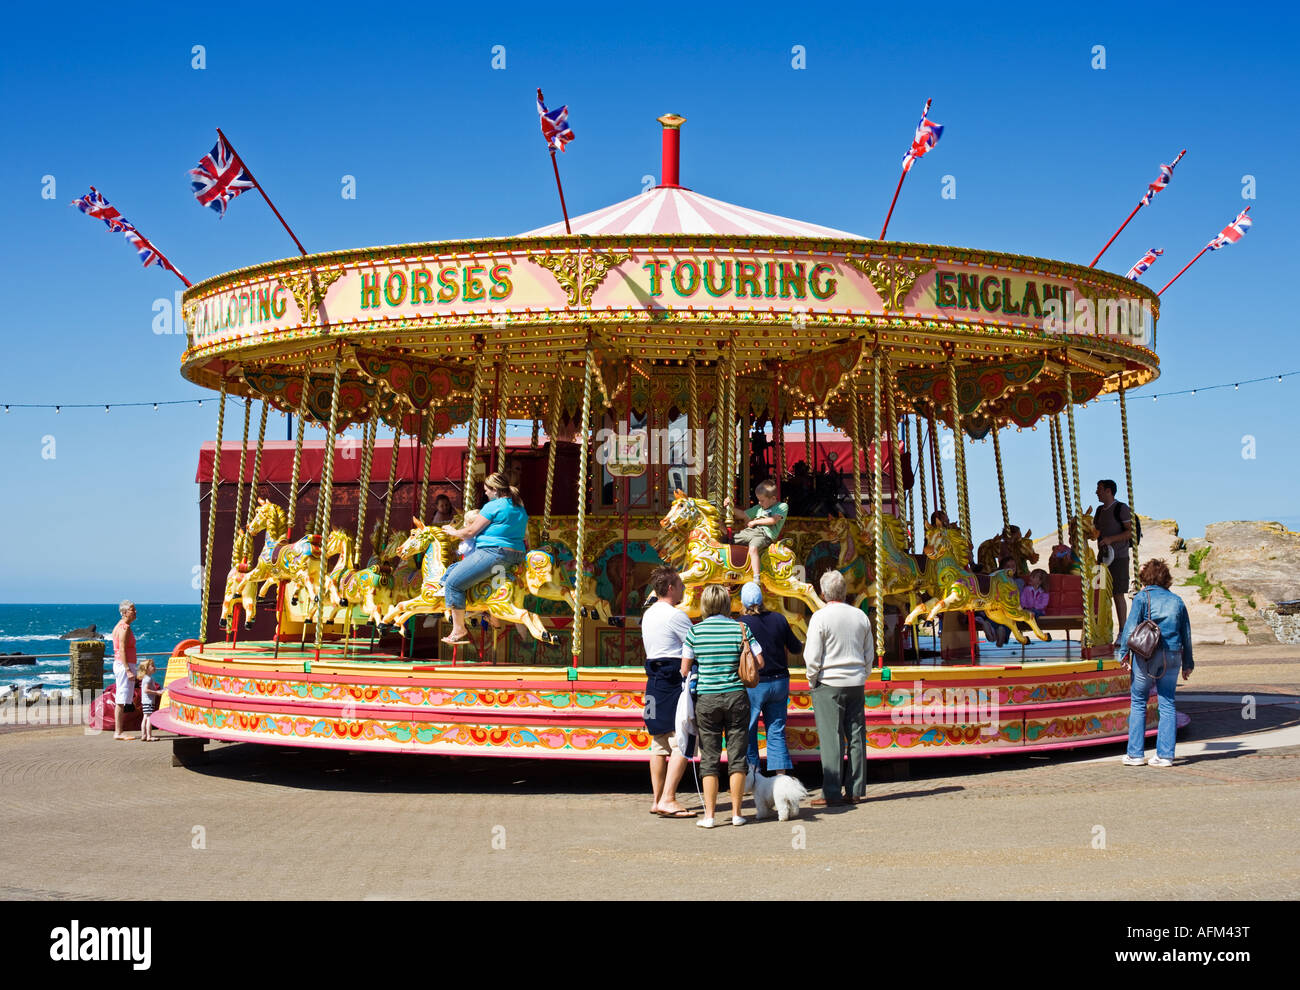 Ilfracombe Devon, UK - merry go round fairground carousel ride sur la promenade Banque D'Images